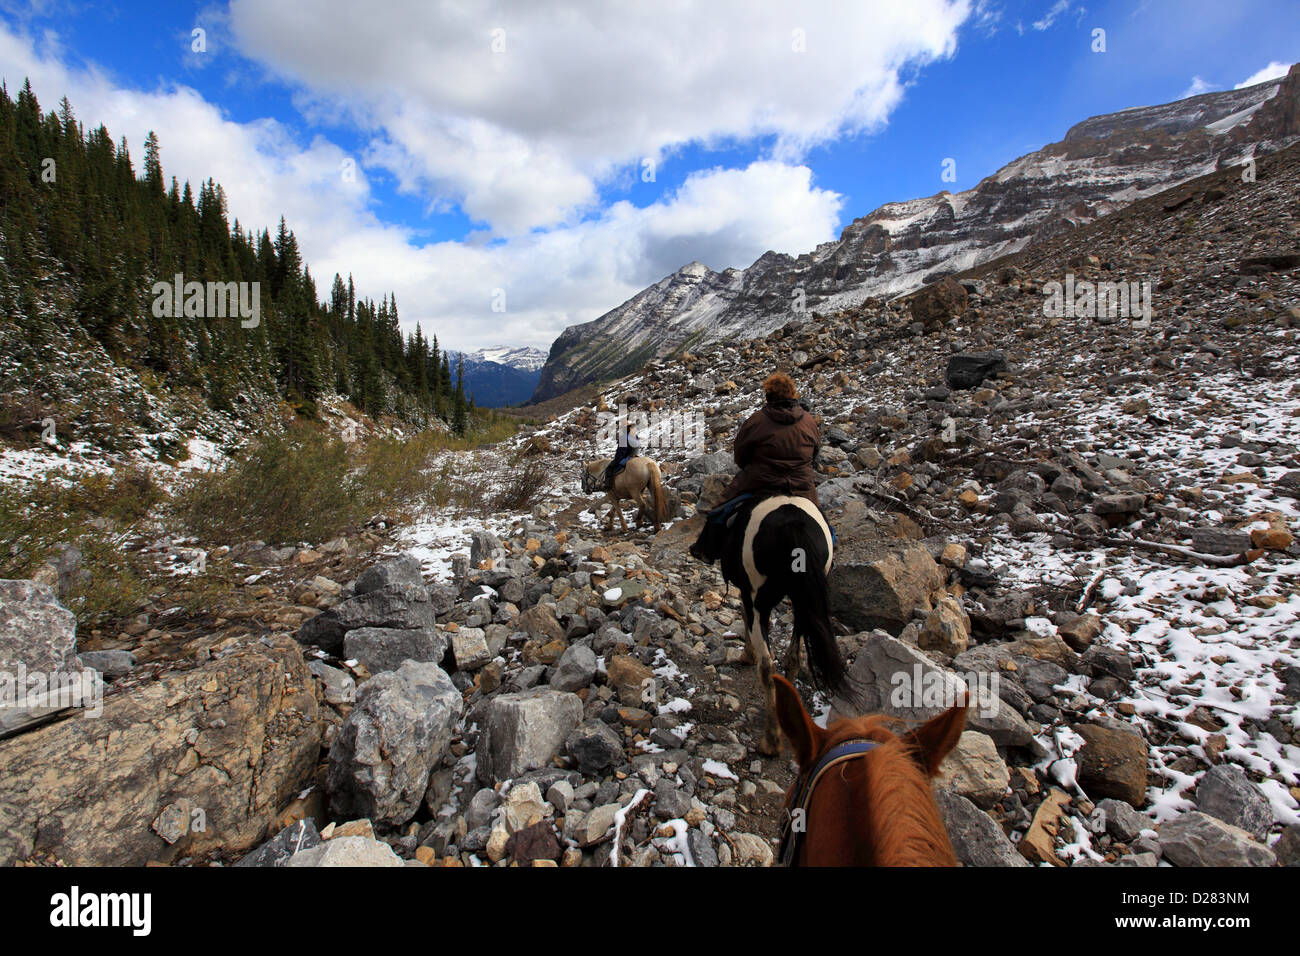 horseback riding in plain of six glaciers alberta canada Banff national park Stock Photo